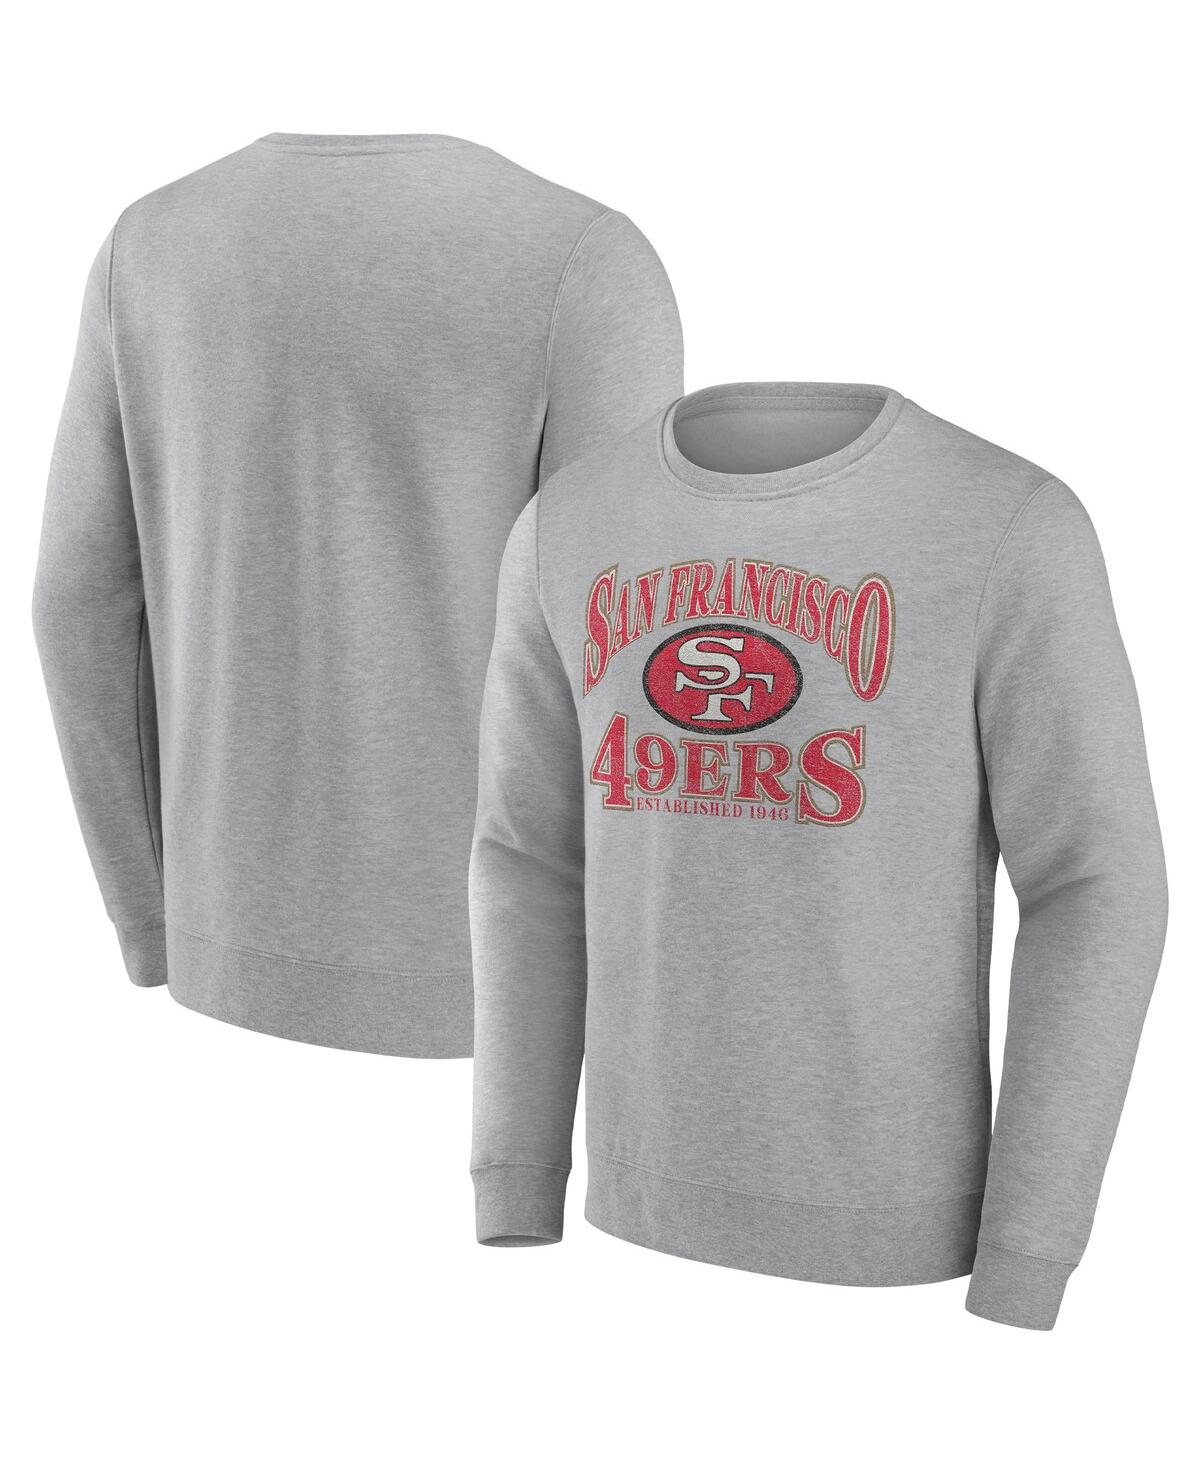 Fanatics Men's  Heathered Charcoal San Francisco 49ers Playability Pullover Sweatshirt